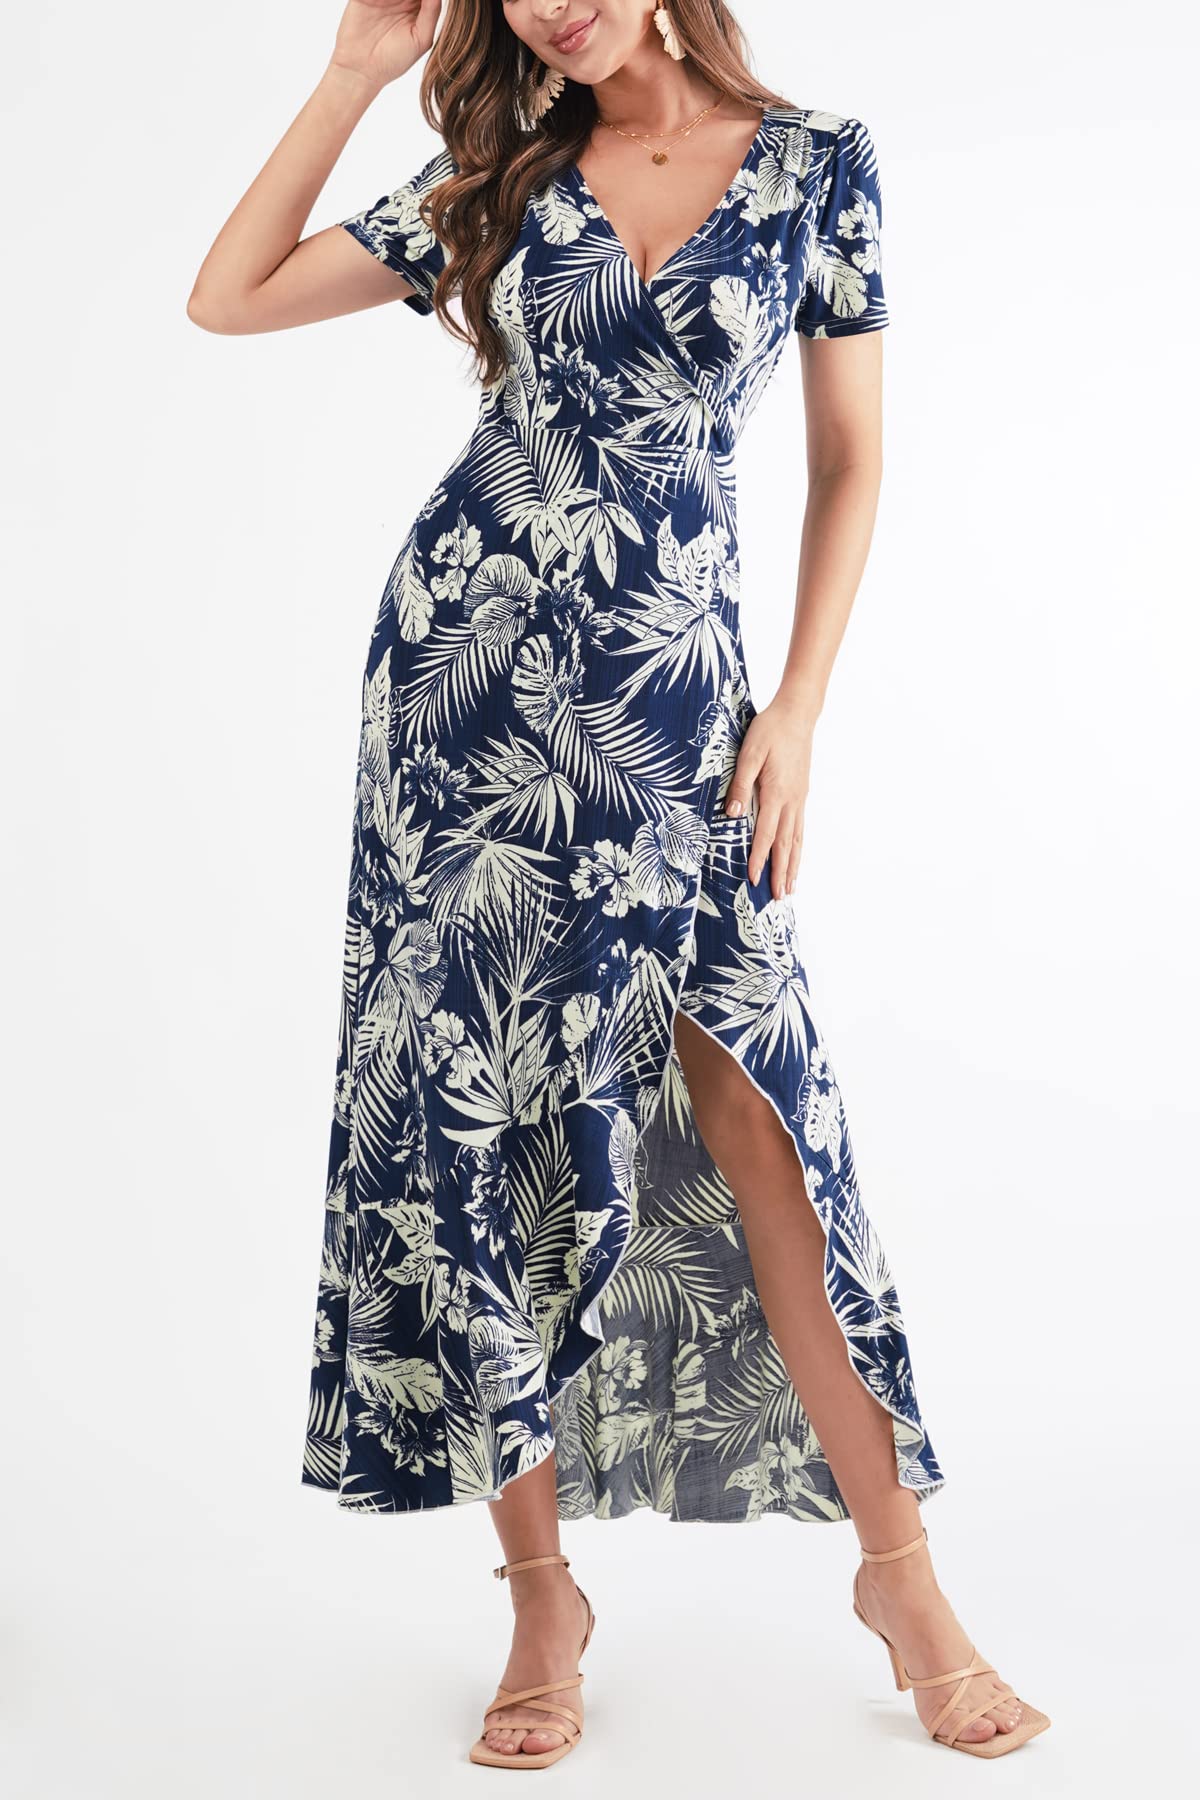 BAISHENGGT Womens Summer Short Sleeve Wrap V Neck Dress Blue Tropical Floral Print Ruffle Hem Bohemian Flowy Long Maxi Dresses